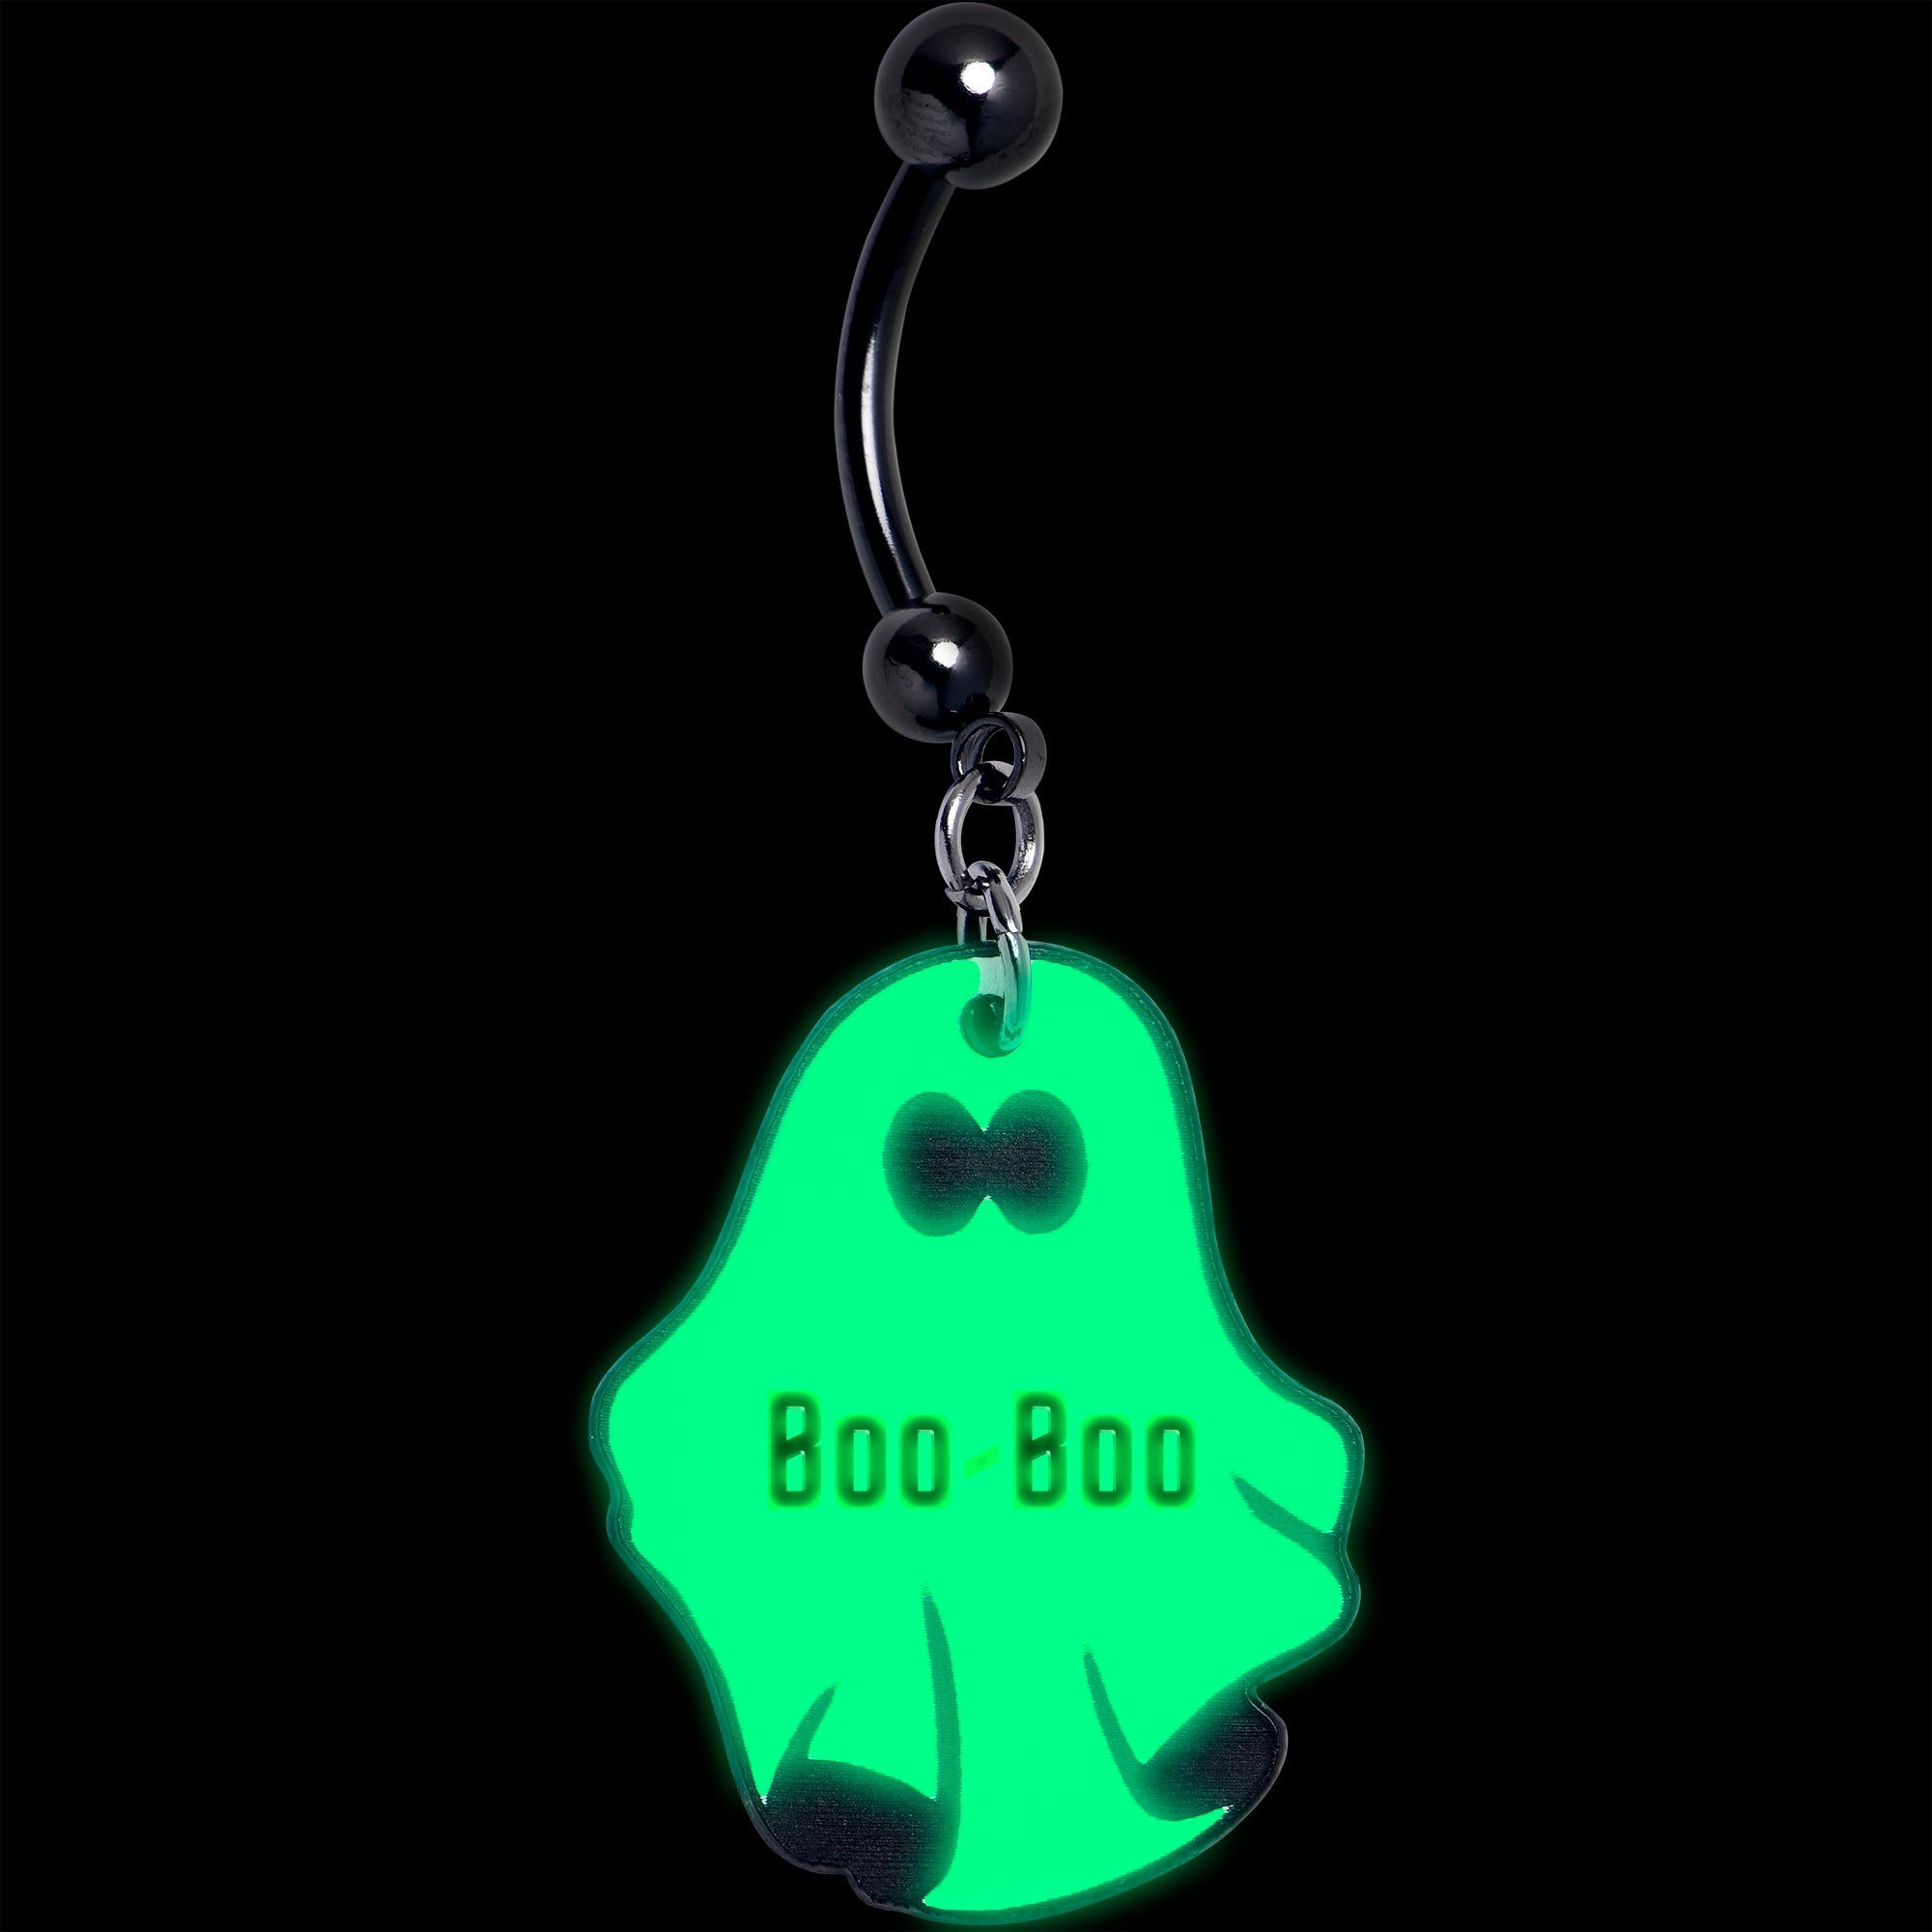 Custom Black Glow In The Dark Halloween Ghost Dangle Belly Ring